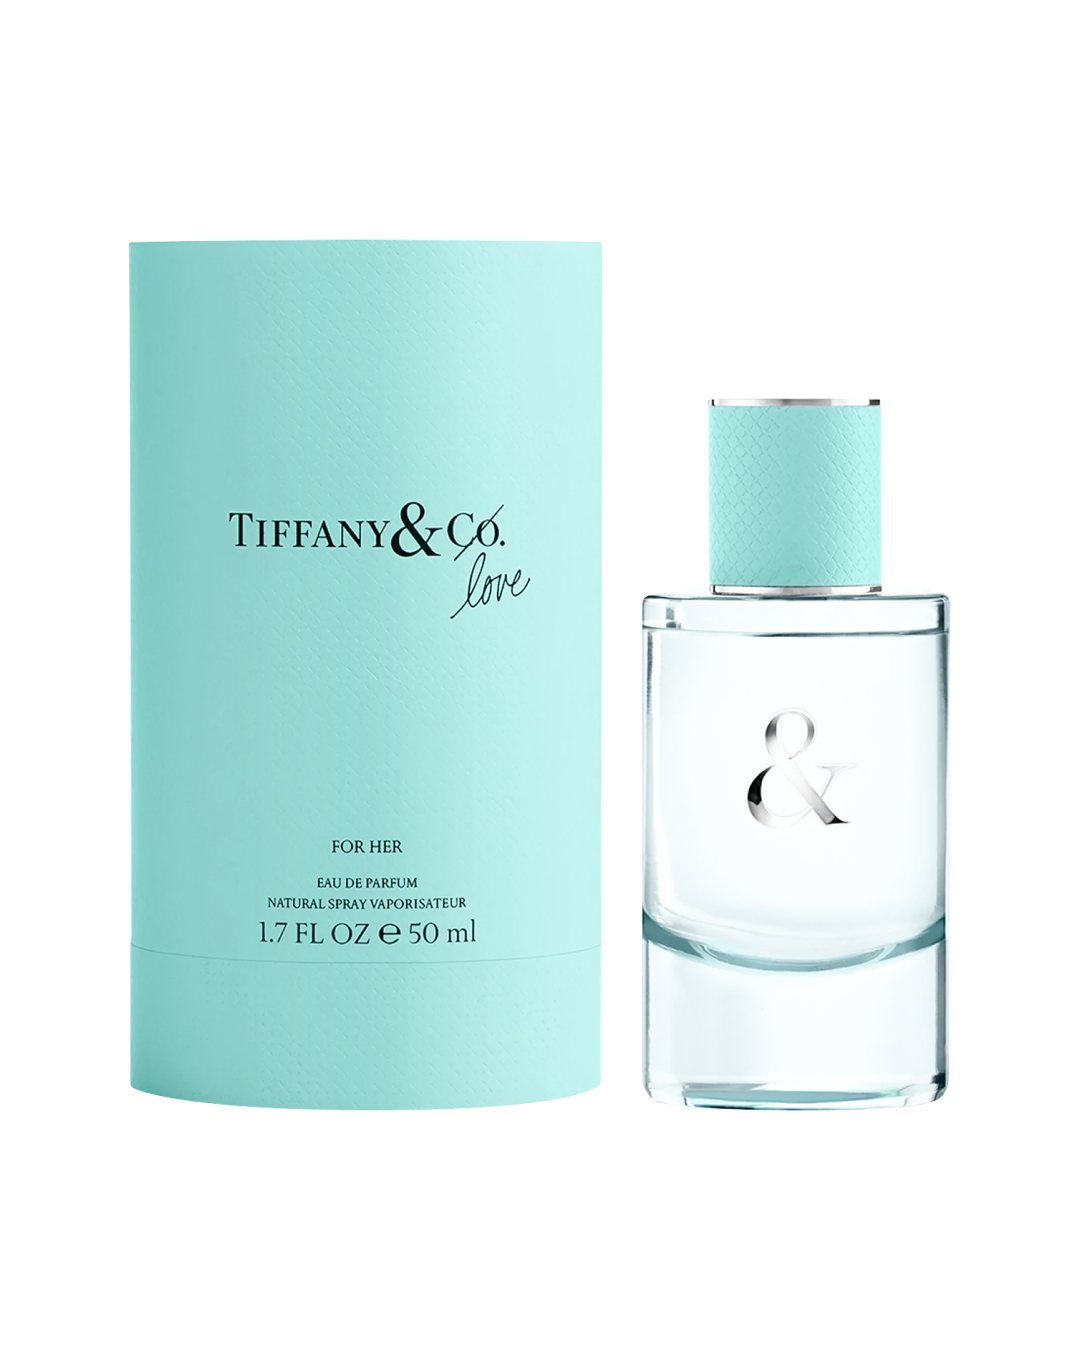 Tiffany & Co. Tiffany & Love Eau de Parfum for Her (50ml) - Best Buy World Philippines